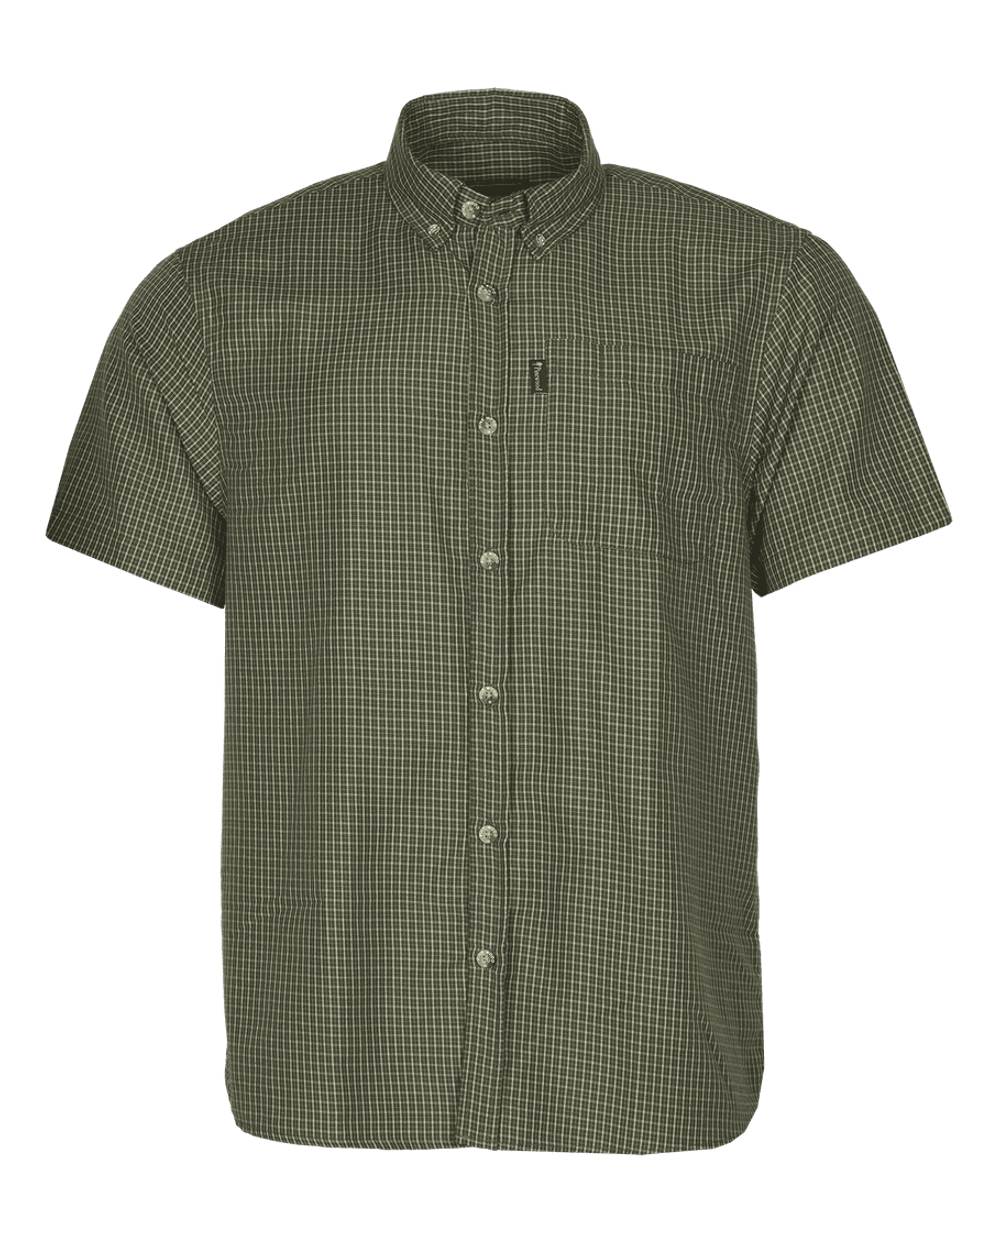 Pinewood Mens Summer Shirt in Green